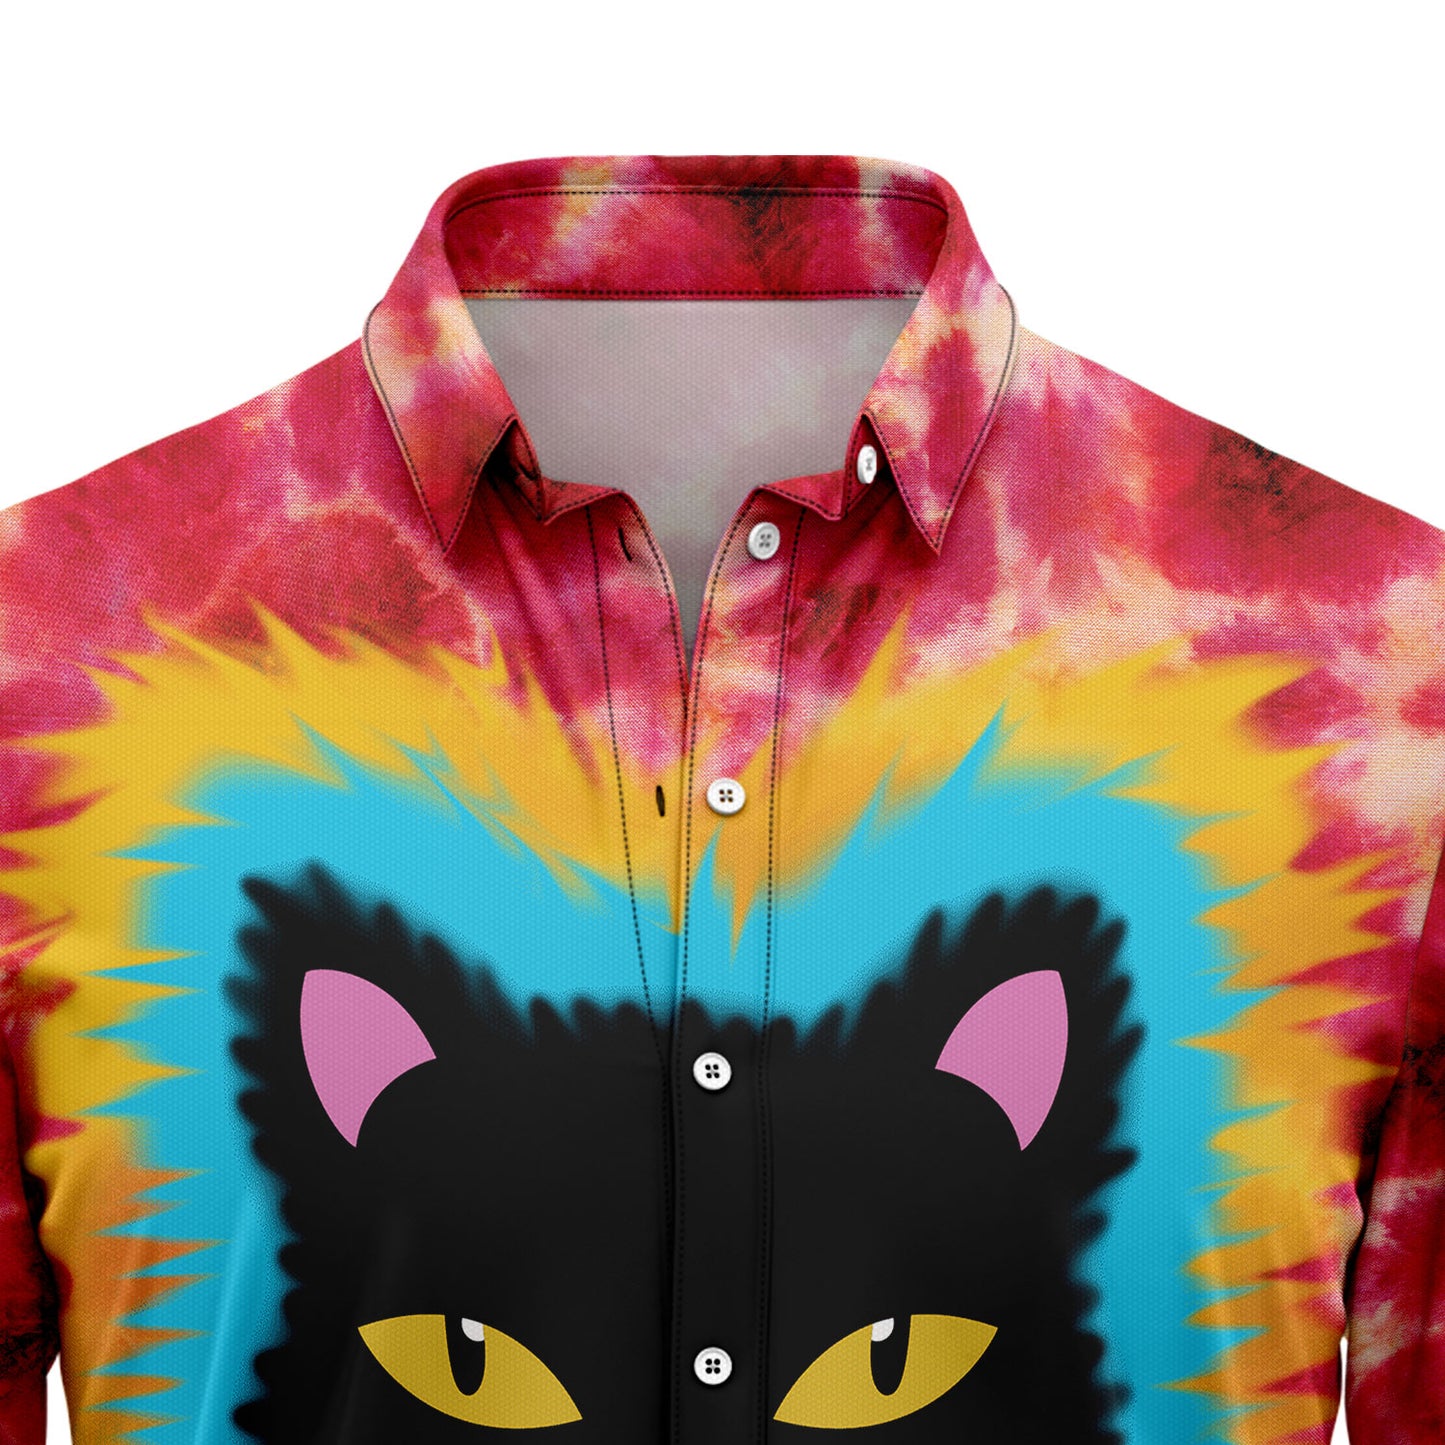 Black Cat Tie Dye H10814 Hawaiian Shirt